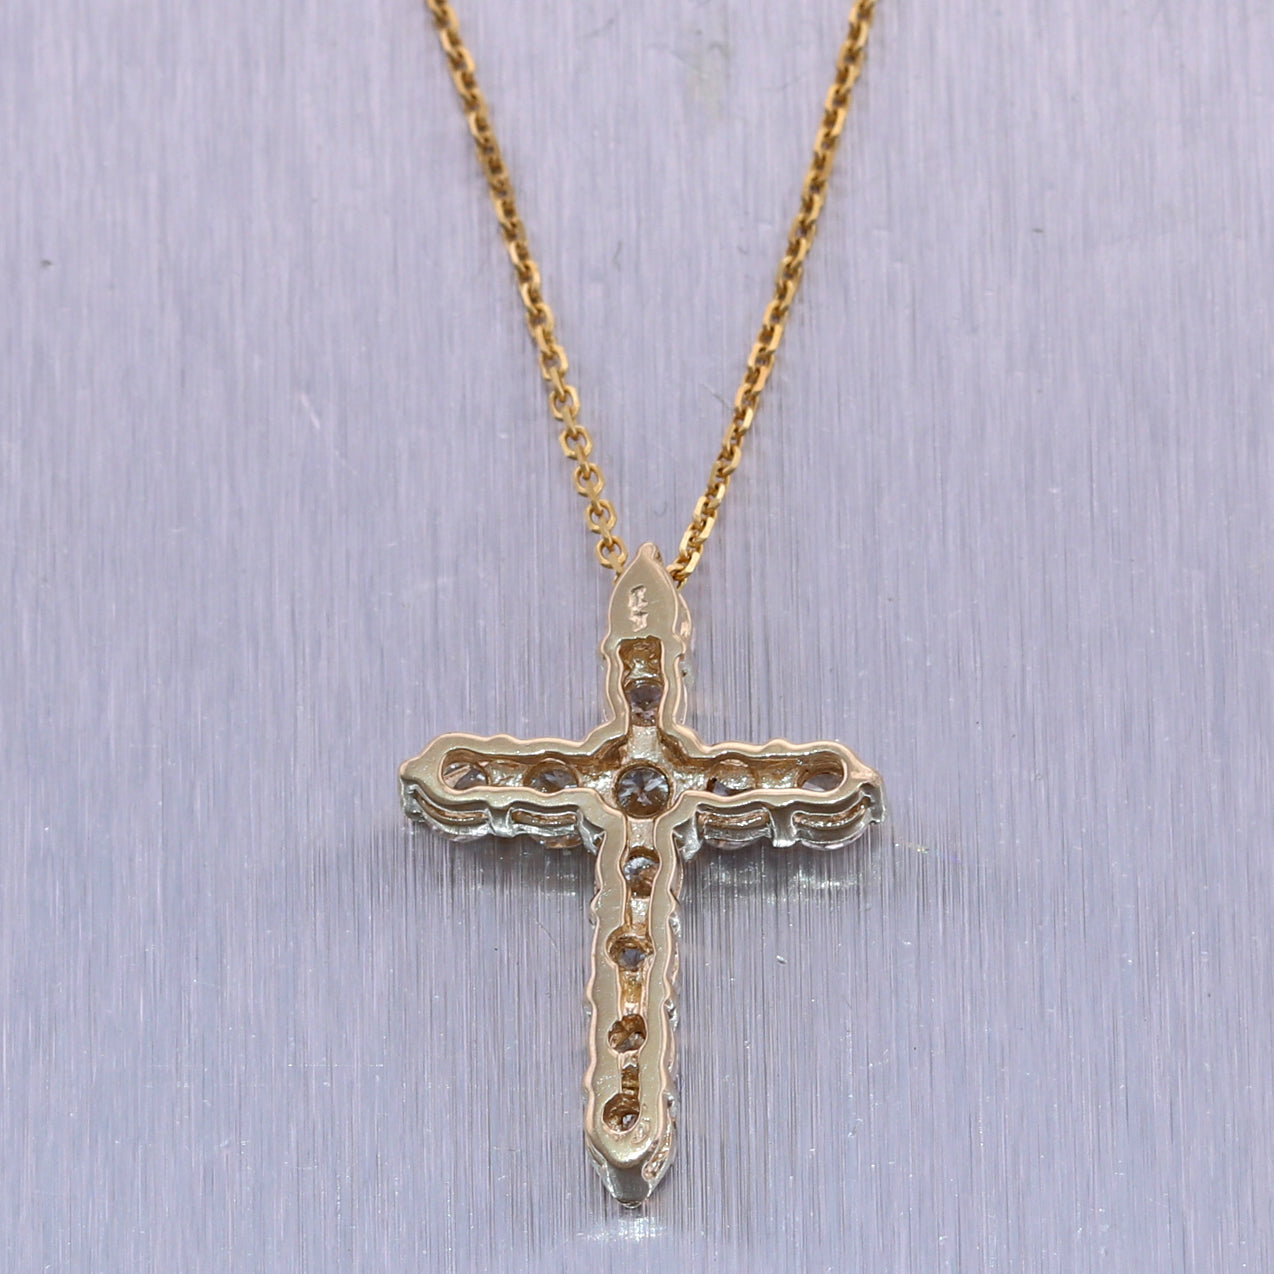 Modern 14k Yellow Gold 1.10ctw Diamond Cross 20" Necklace